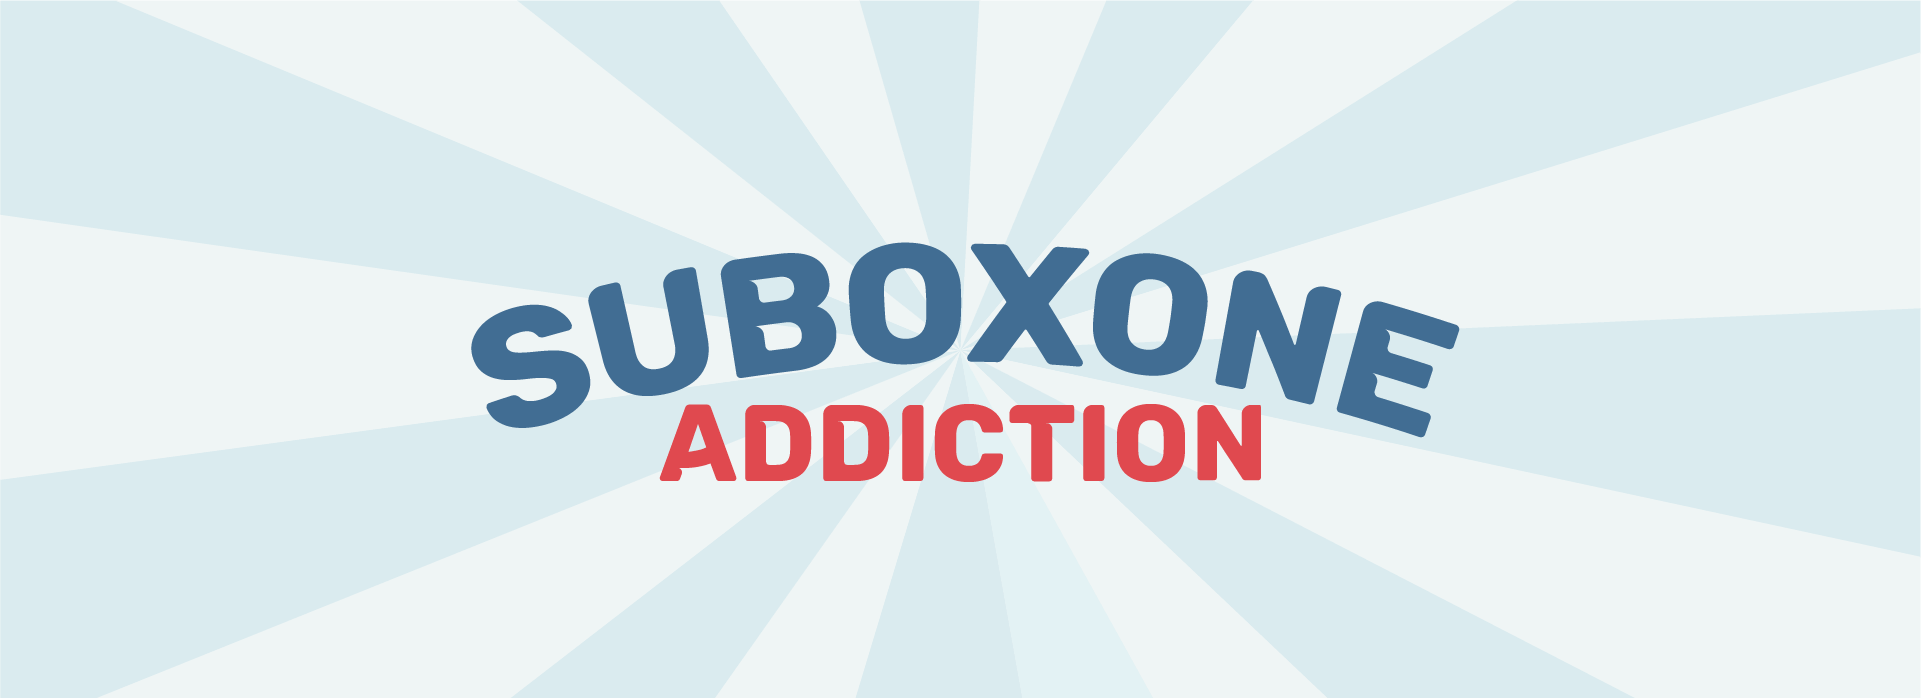 suboxone-header